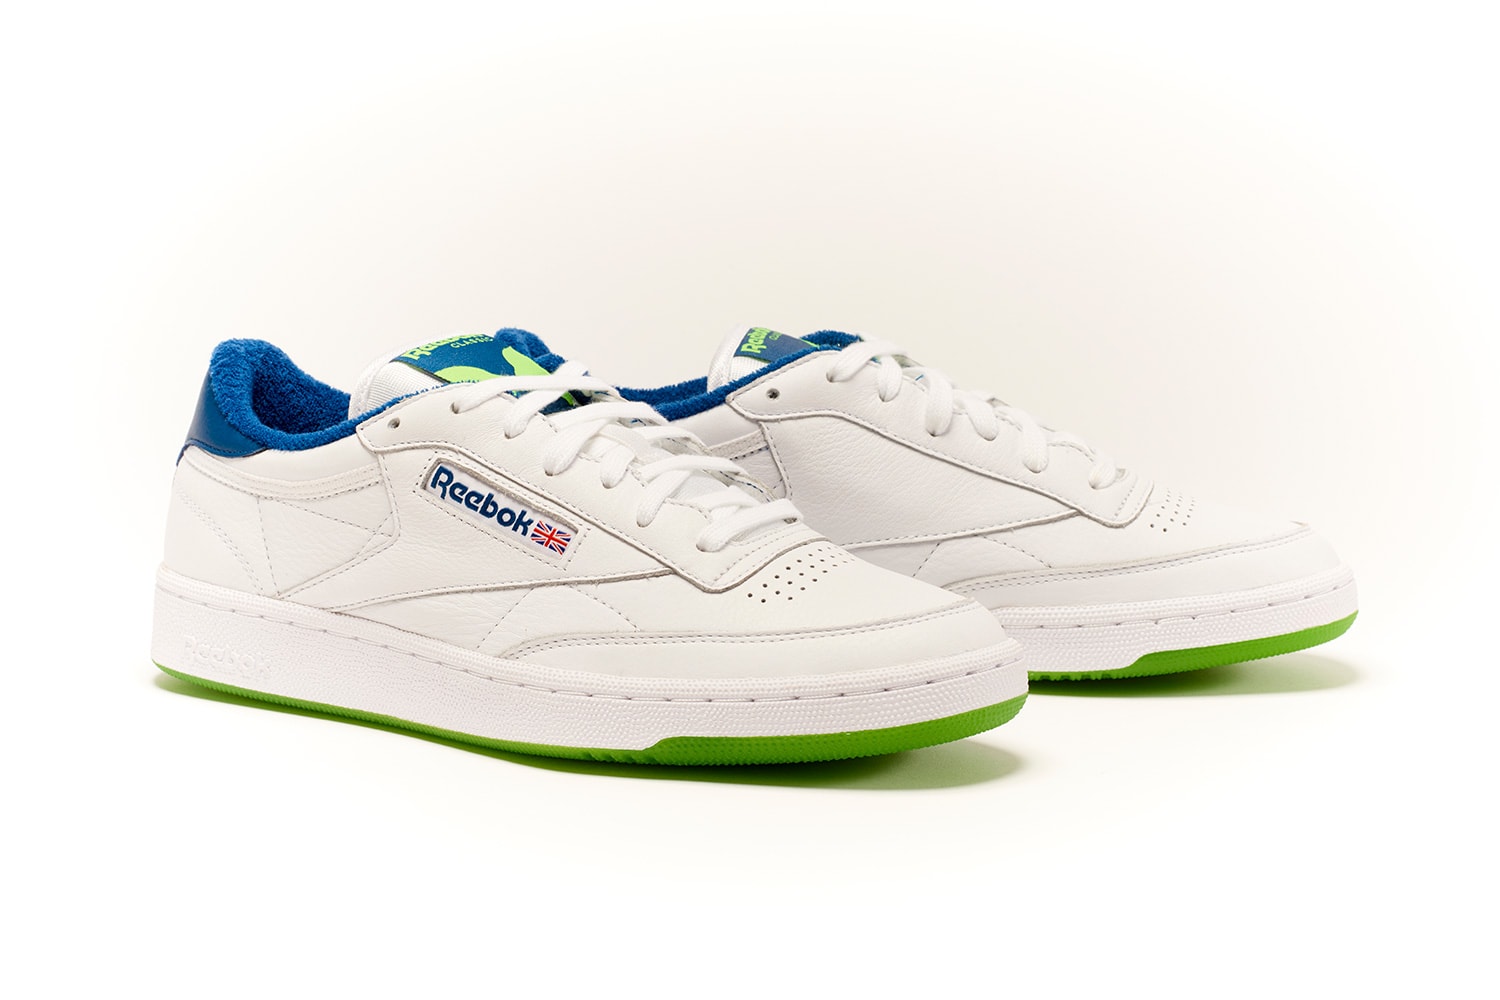 Bronze56K x Reebok Club C Release date sneaker collaboration buy online price info skate white blue green